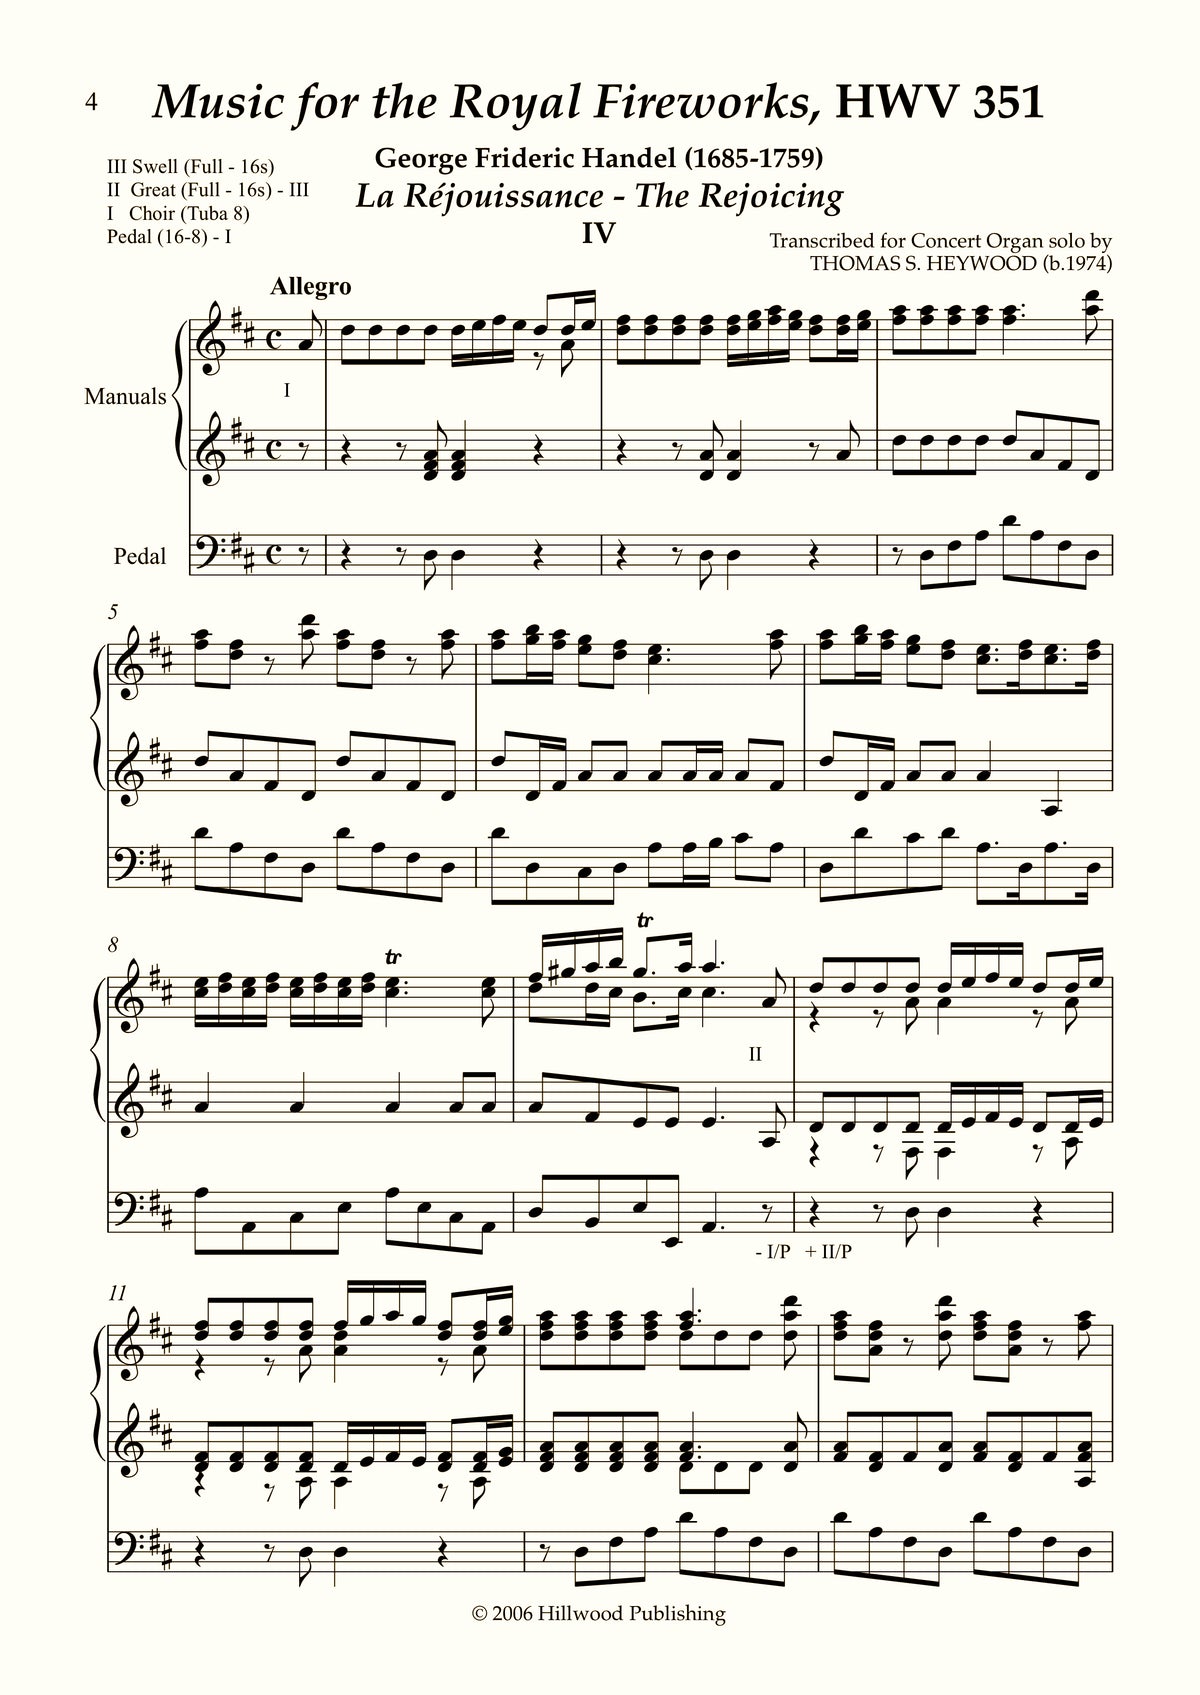 Handel/Heywood - The Rejoicing from Music for the Royal Fireworks, HWV 351 (Score) | Thomas Heywood | Concert Organ International